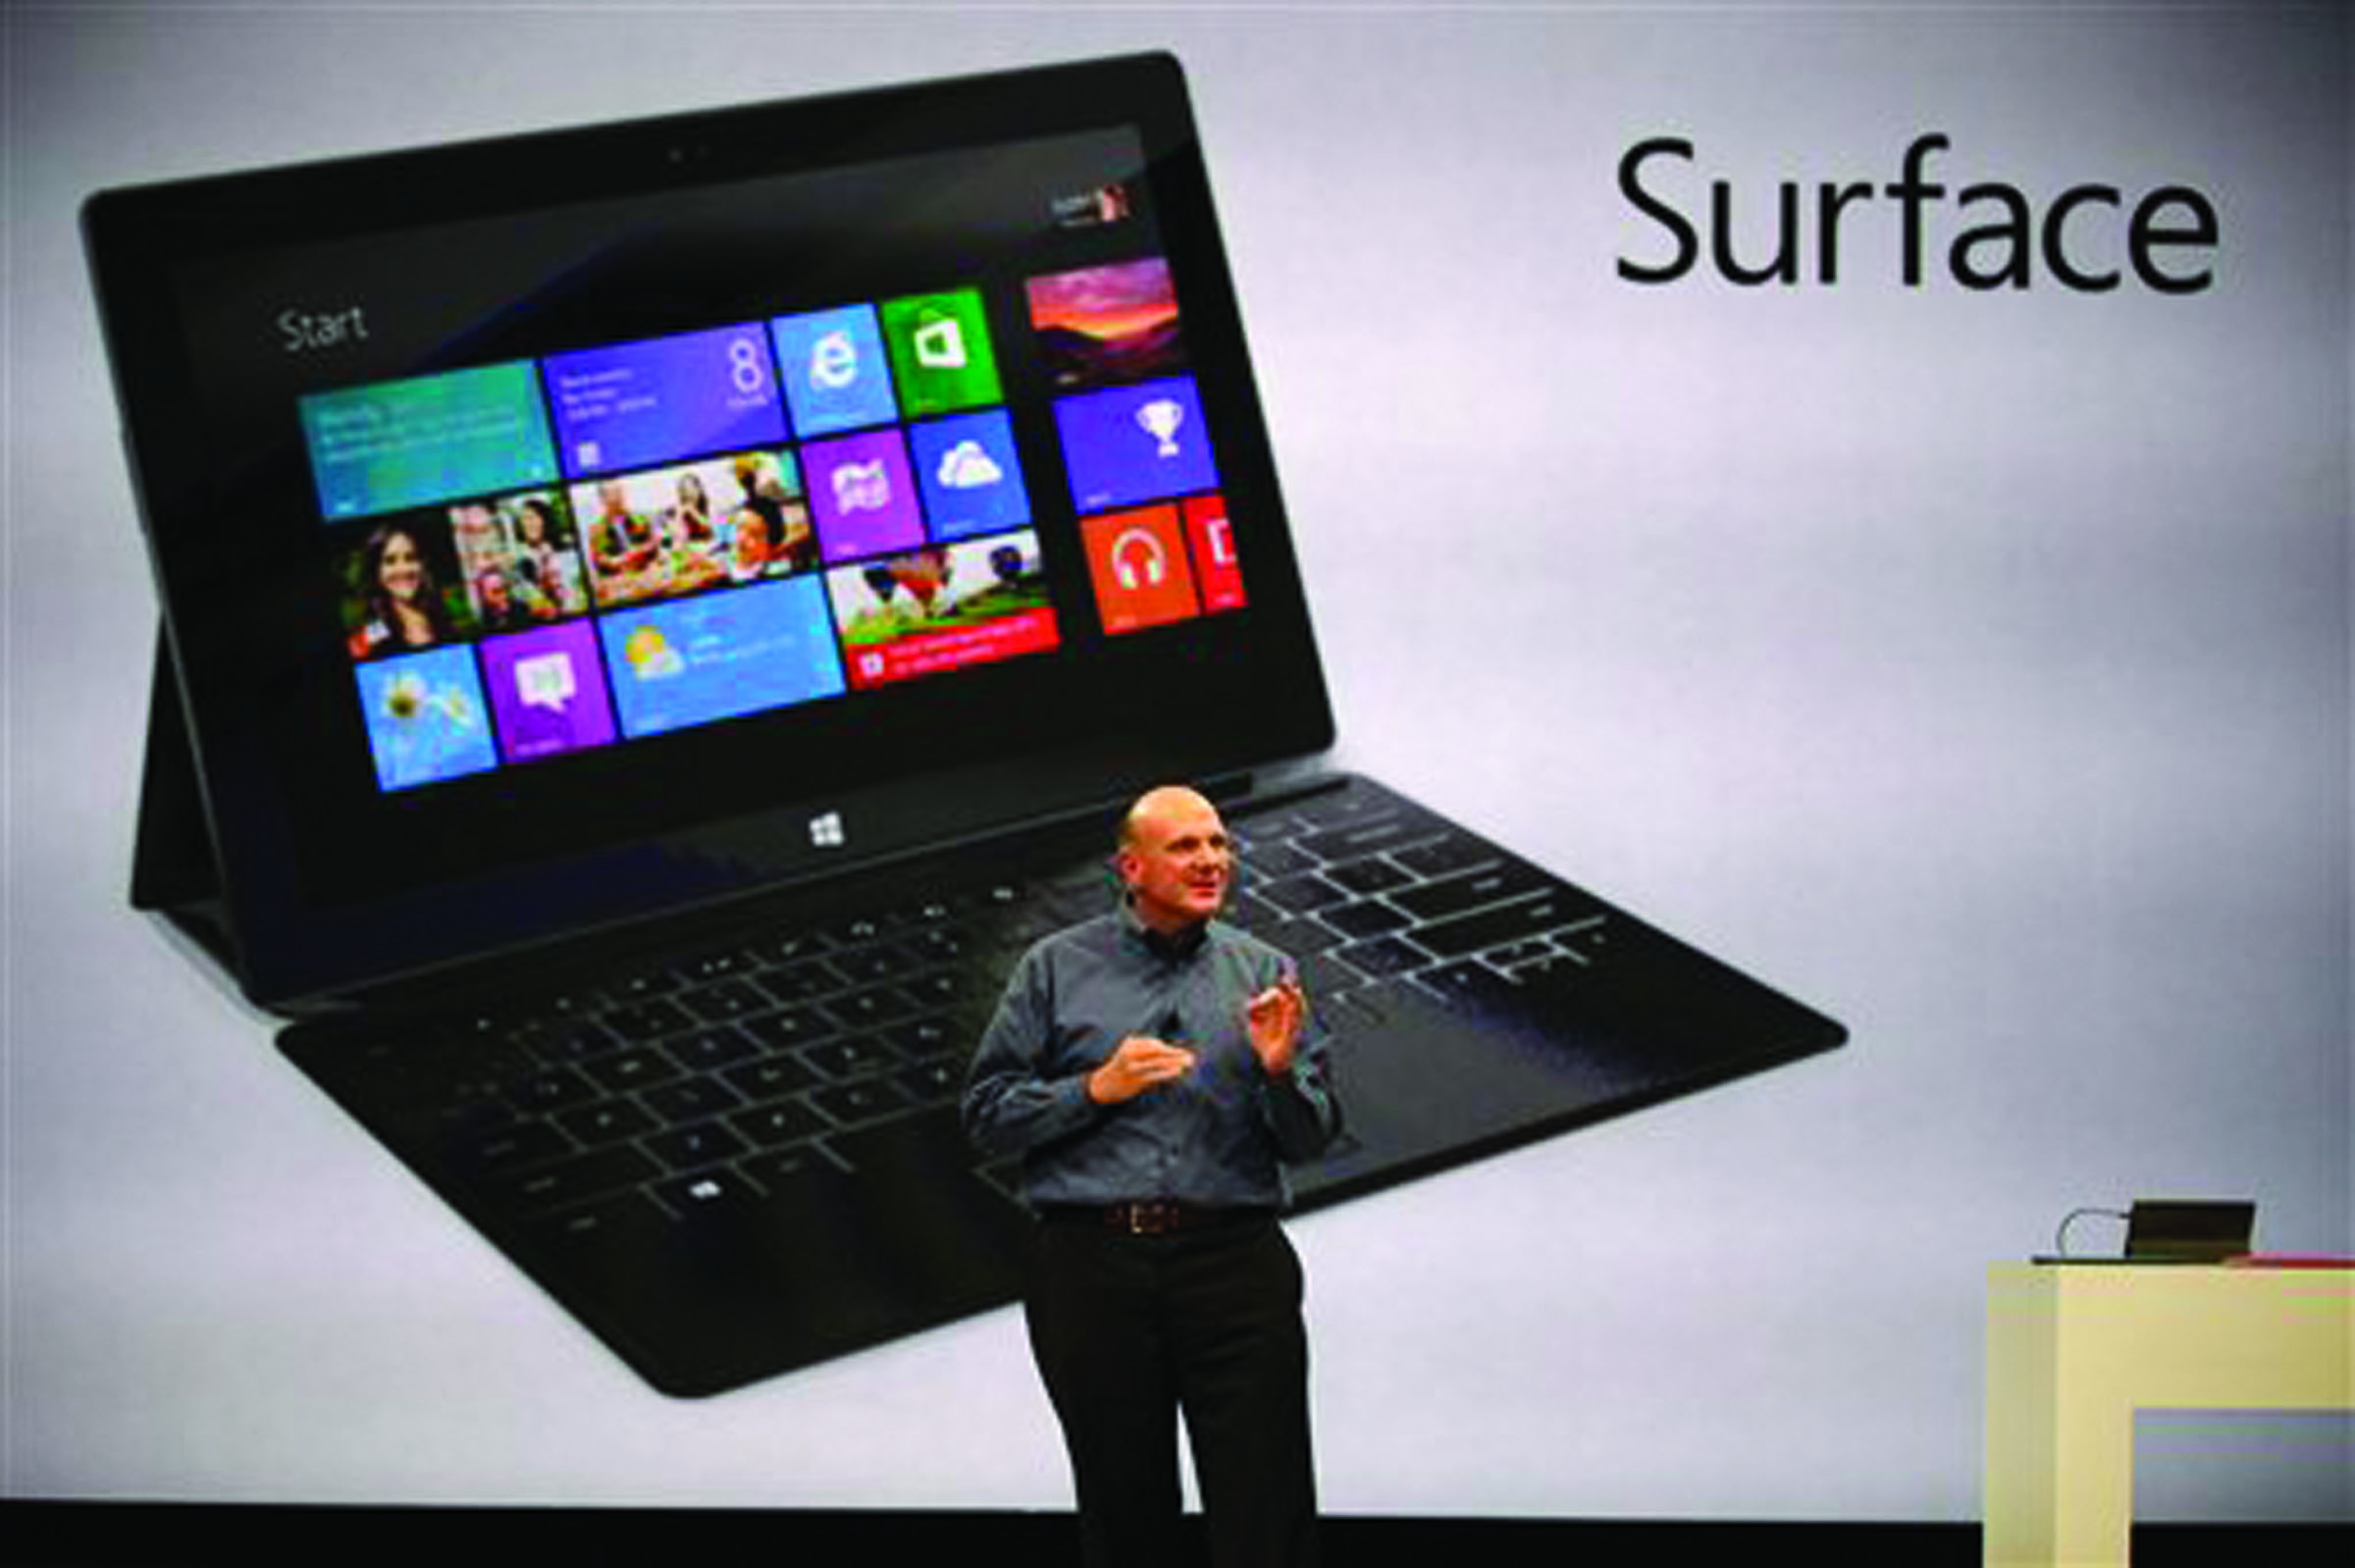 Microsoft CEO Steve Ballmer unveils Surface